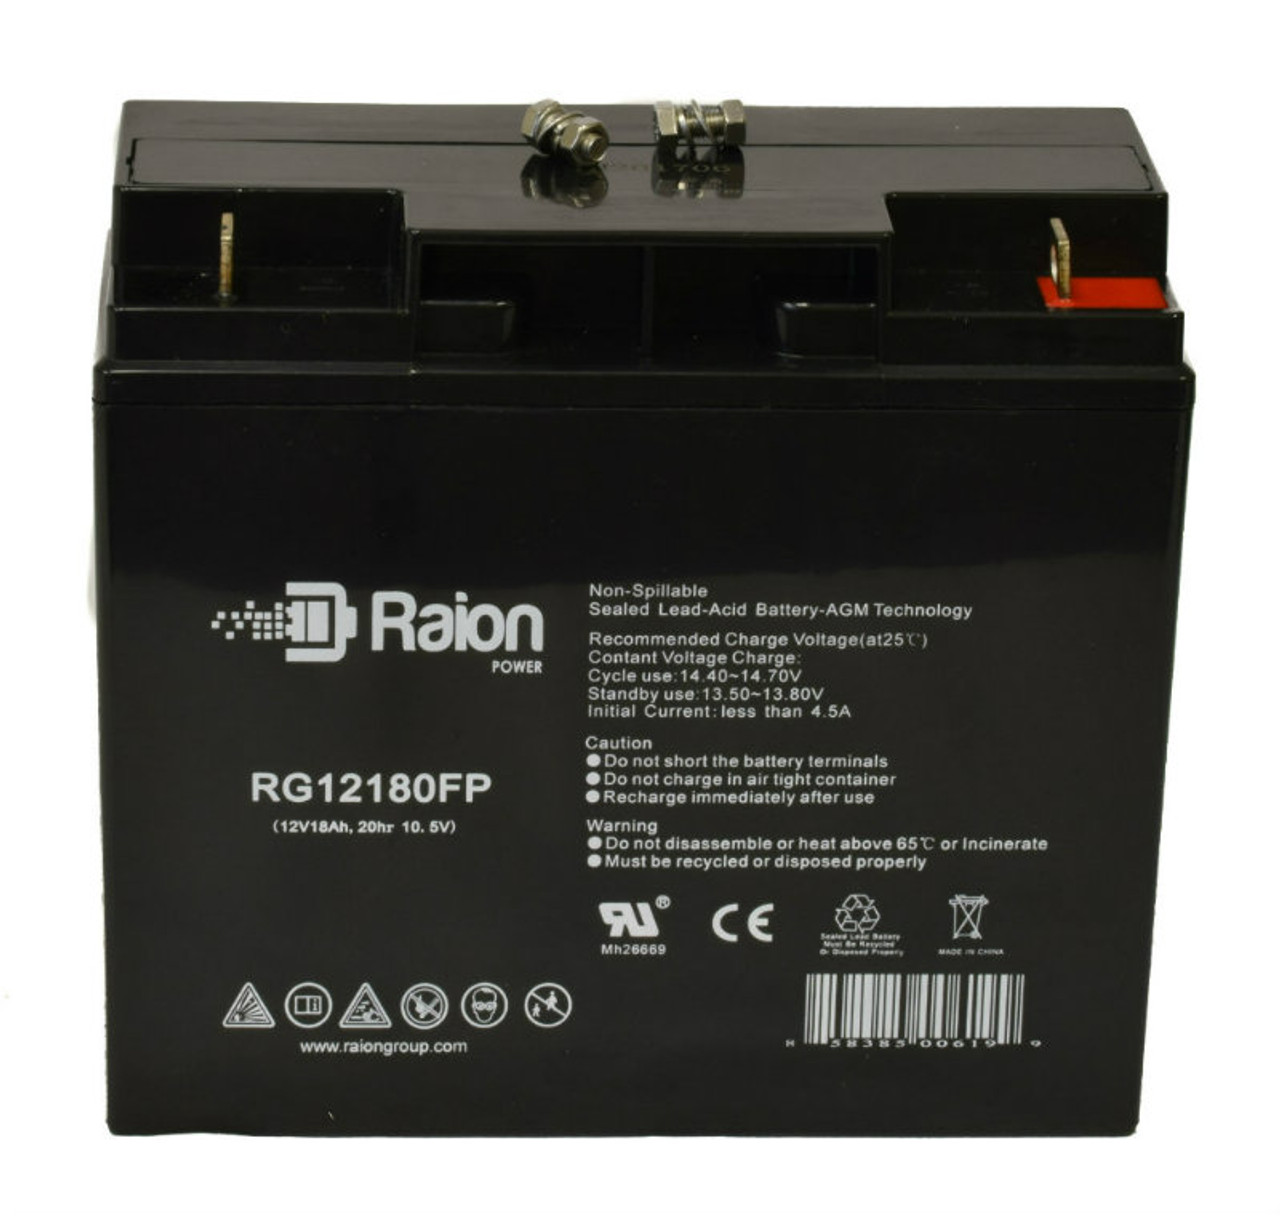 Raion Power RG12180FP 12V 18Ah Lead Acid Battery for Vasworld Power GB12-18